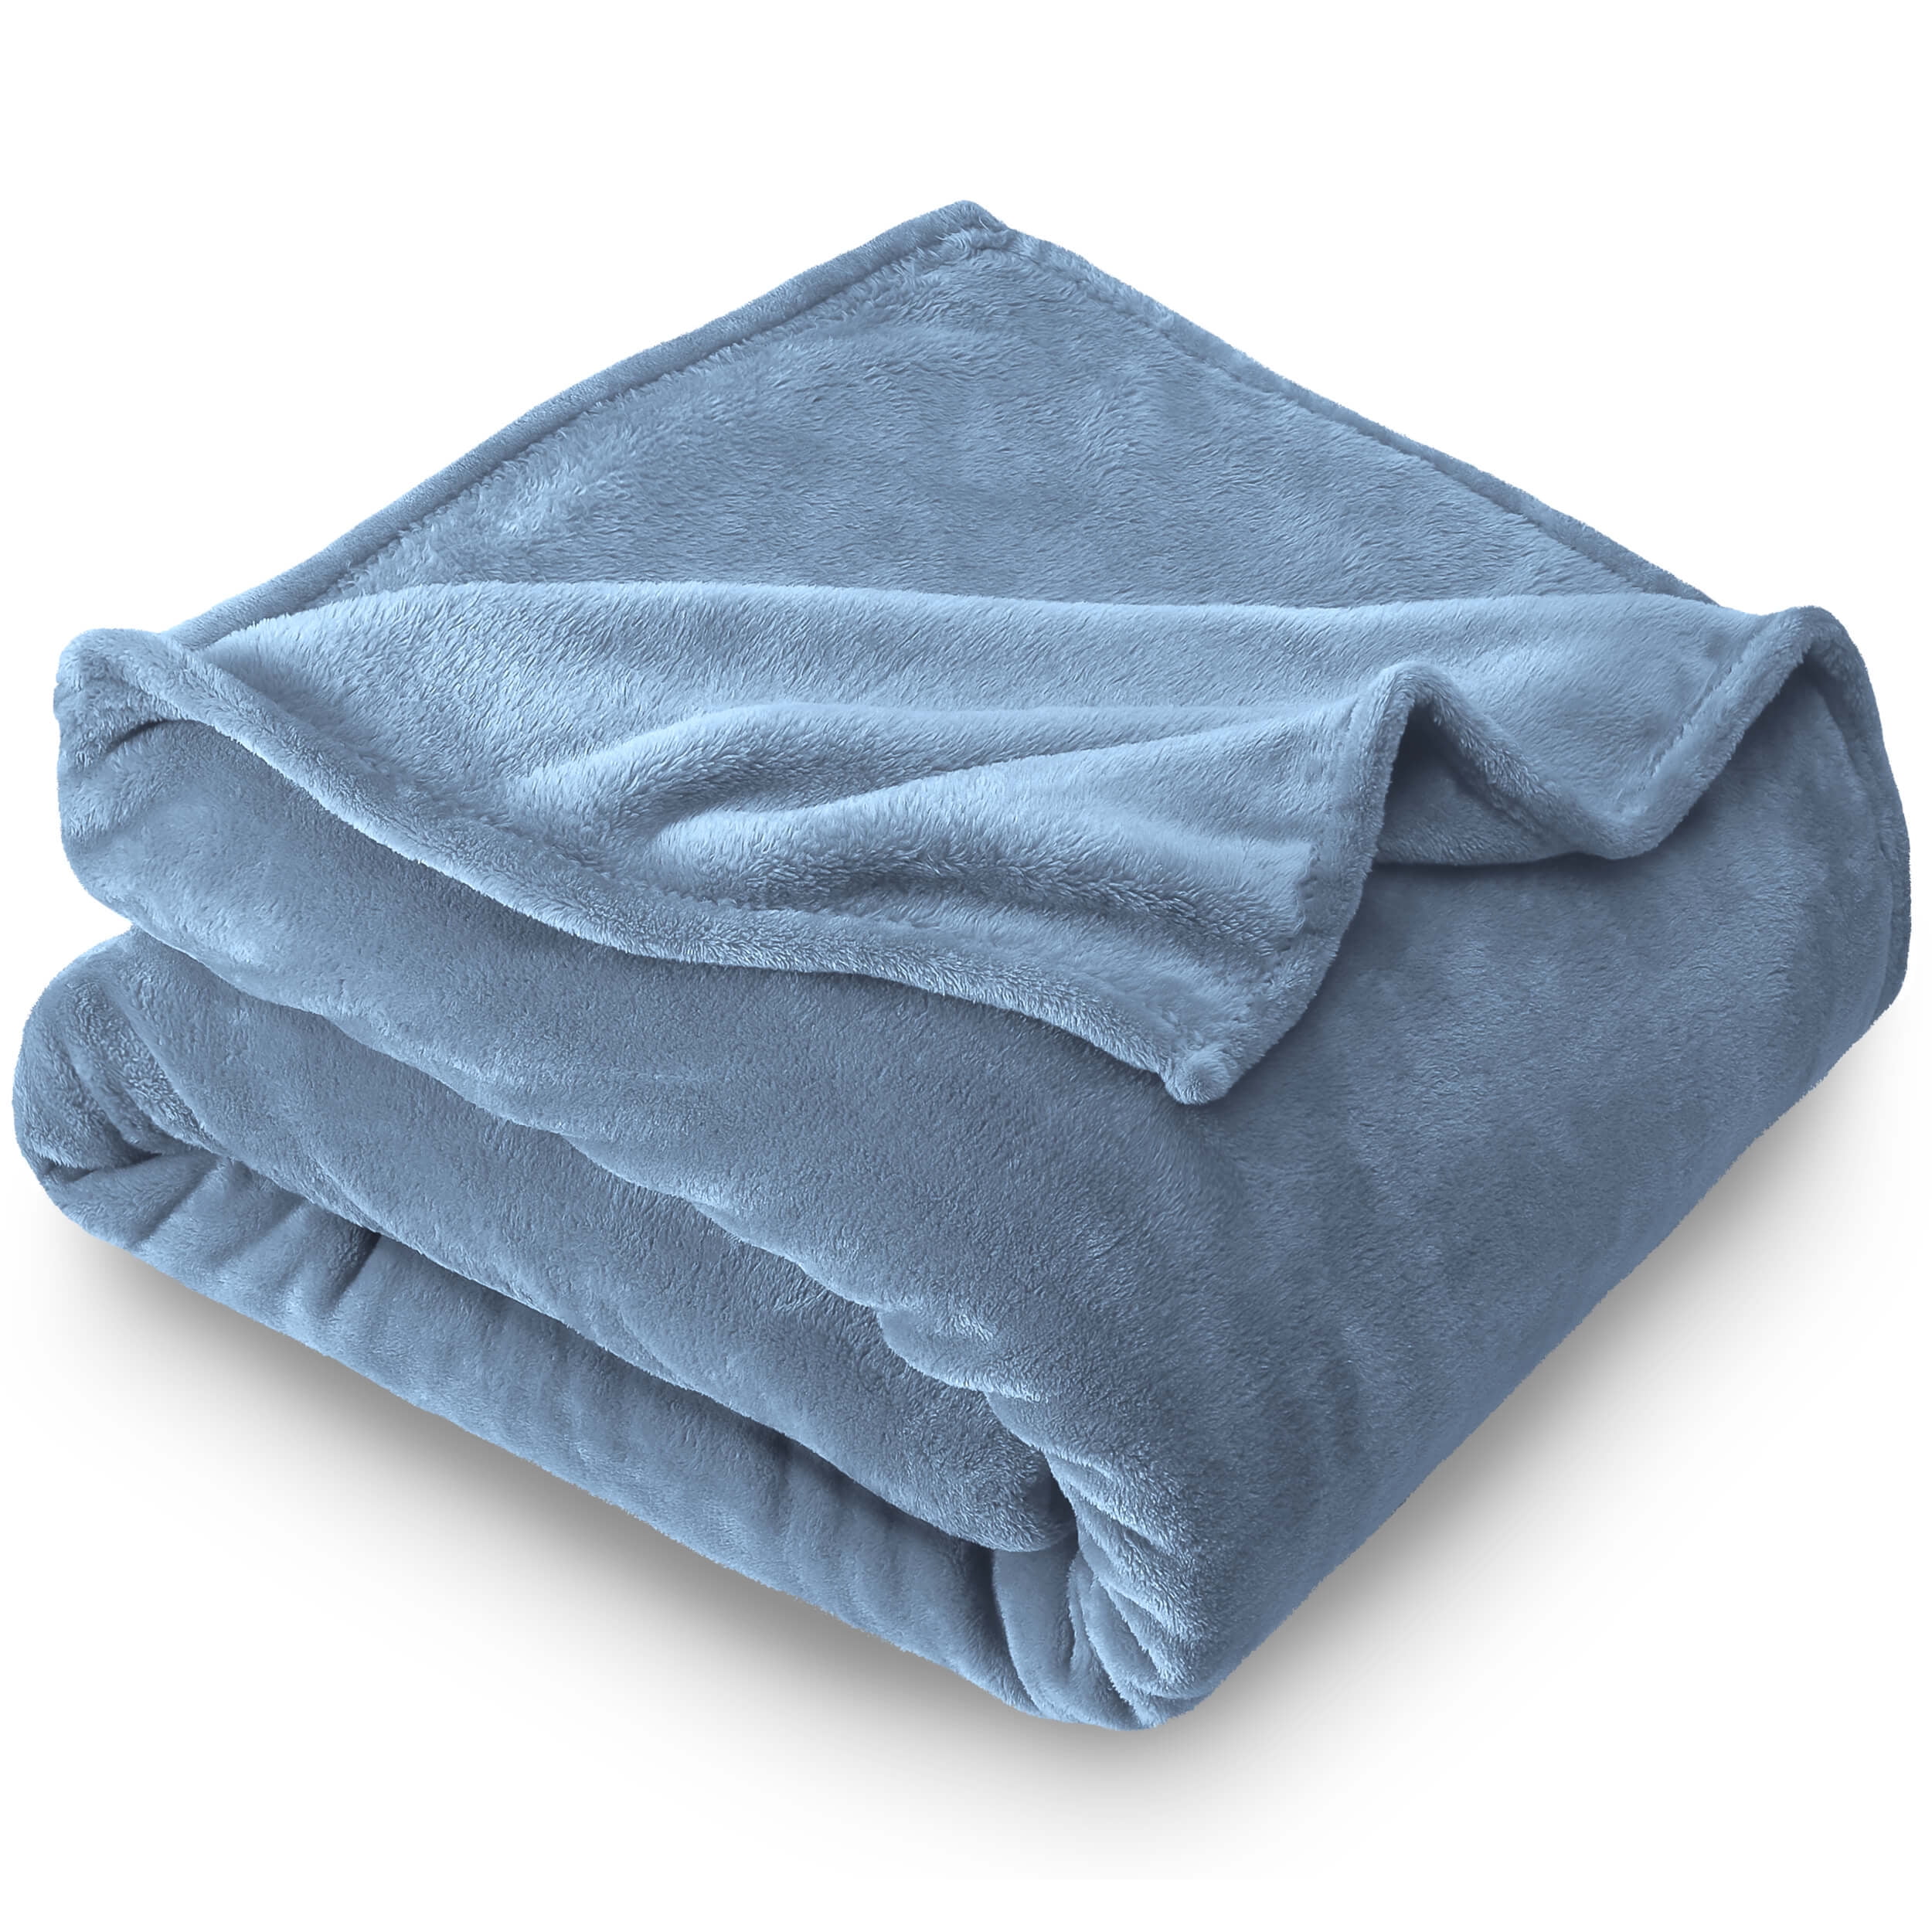 MEROUS Fleece Soft Warm Throw Summer Blanket Lightweight Fuzzy Cozy Microfiber Fuzzy All Season Blankets for Couch Travel Sofa,Sky Blue